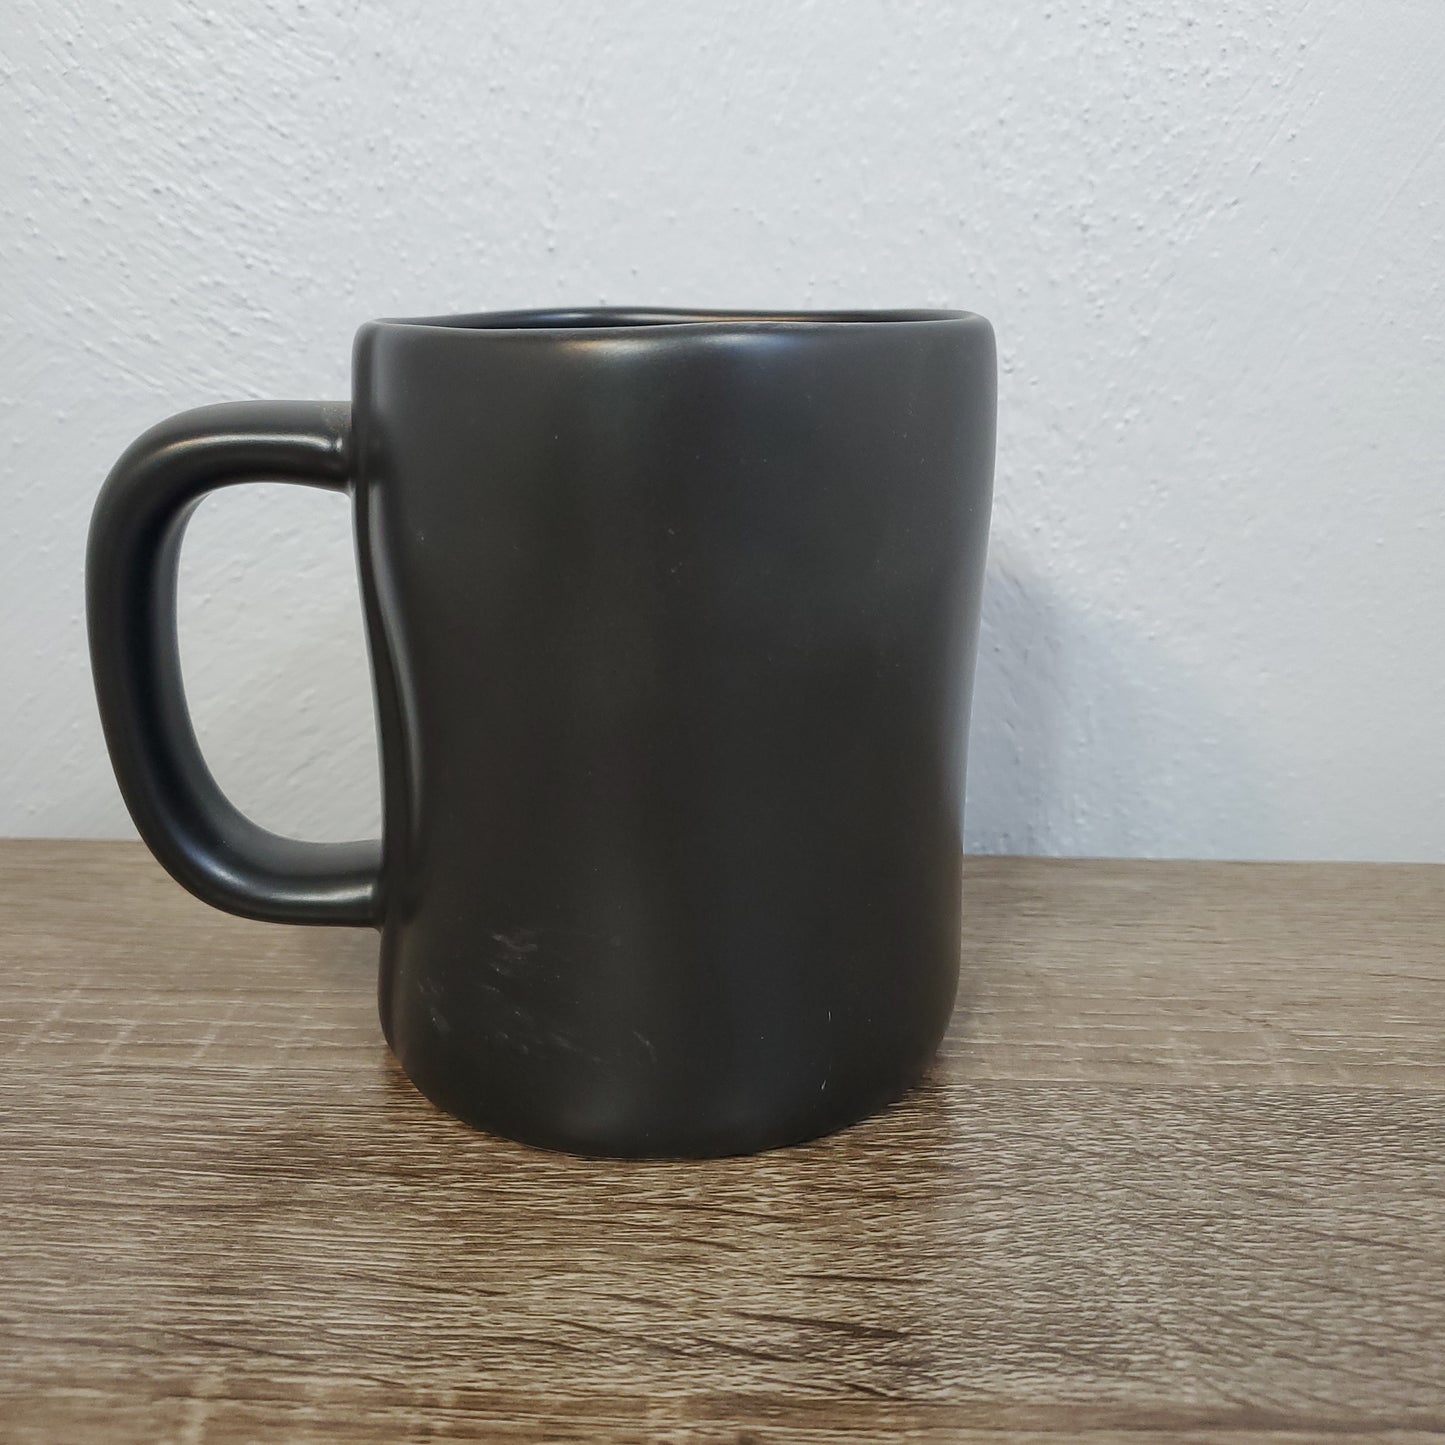 FANG TASTIC Coffee Mug